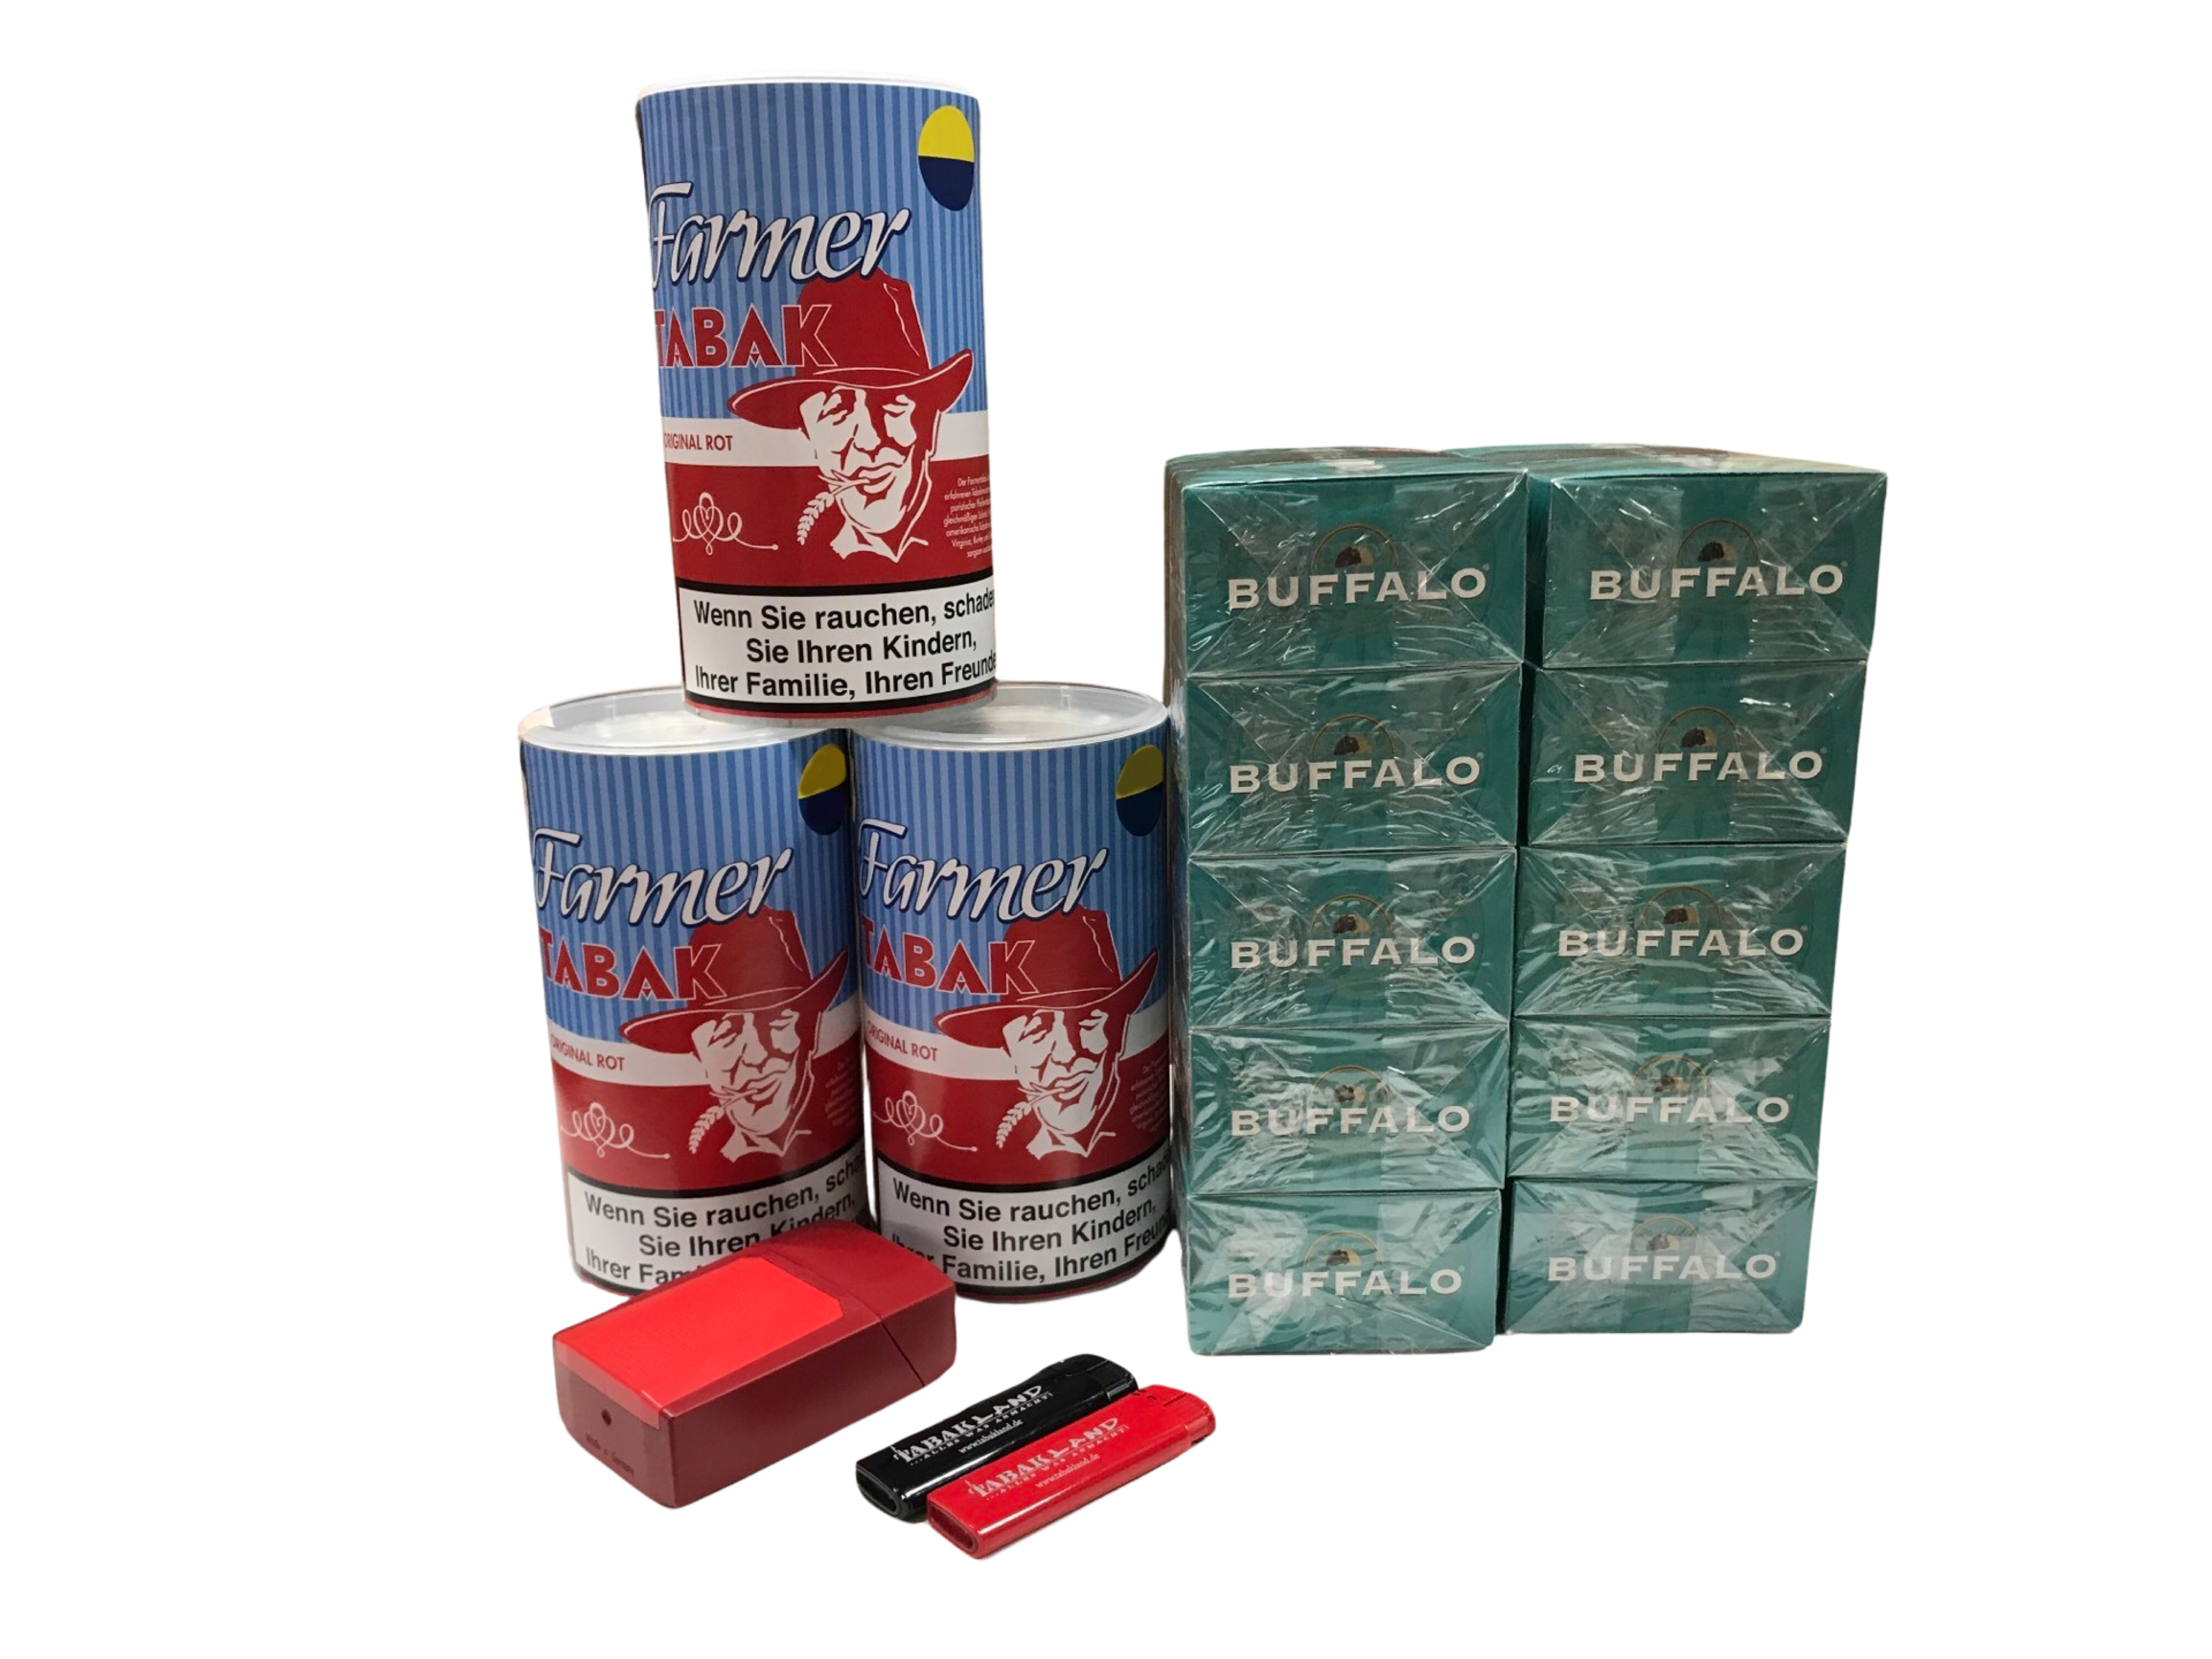 3x Farmer Tabak Rot 160g + 1000 Buffalo Menthol Filterhülsen + 1x Etui/ inkl. 2x Feuerzeug